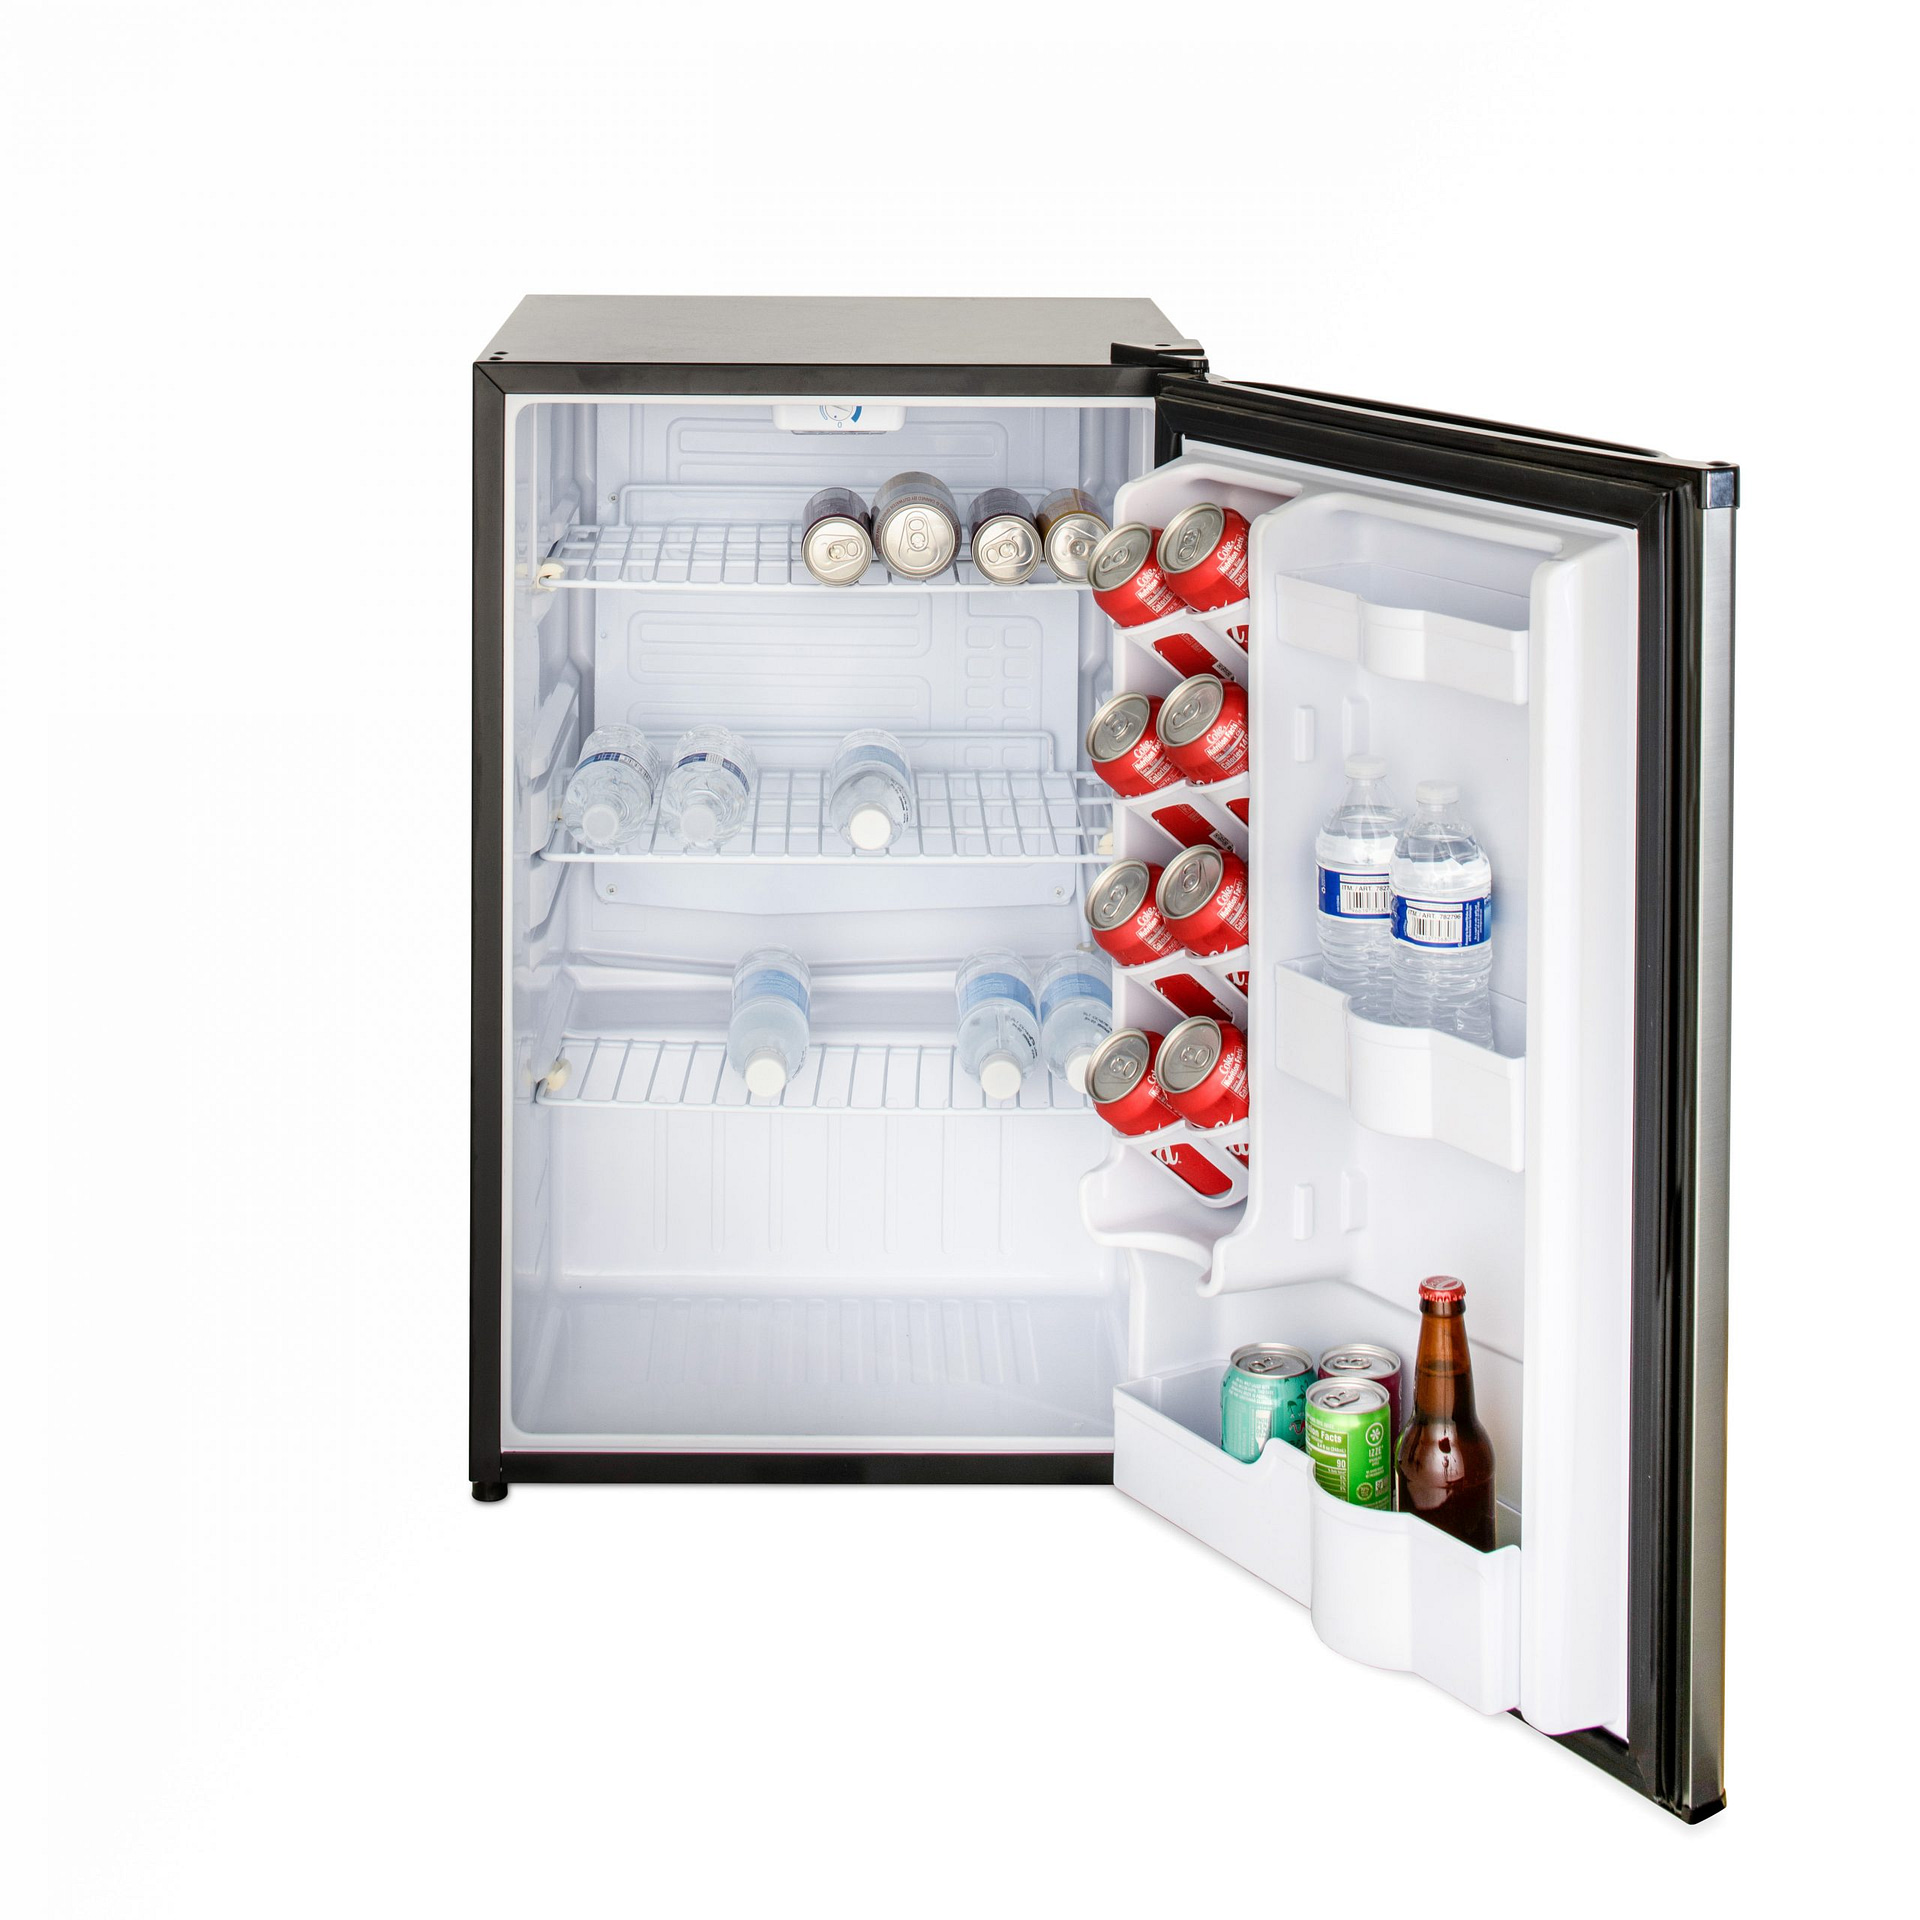 Lion Premium Grills Compact Refrigerator - 4.5 cu ft - Silver